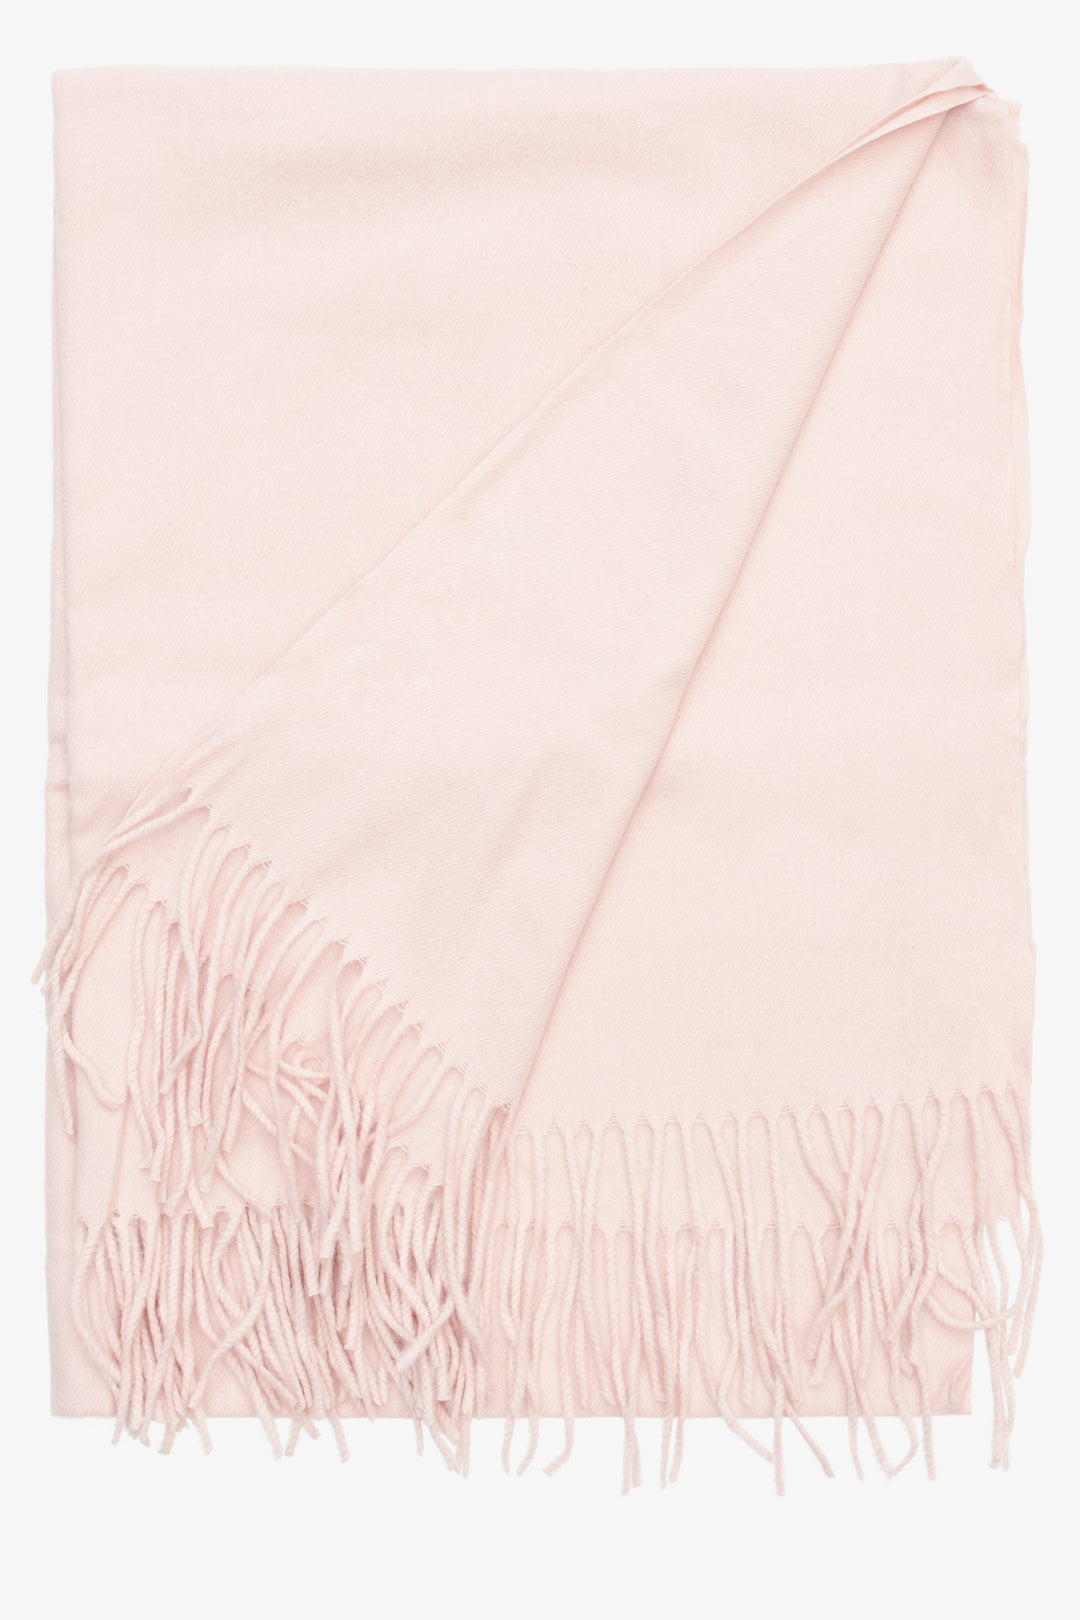 Women's light pink scarf by Estro.